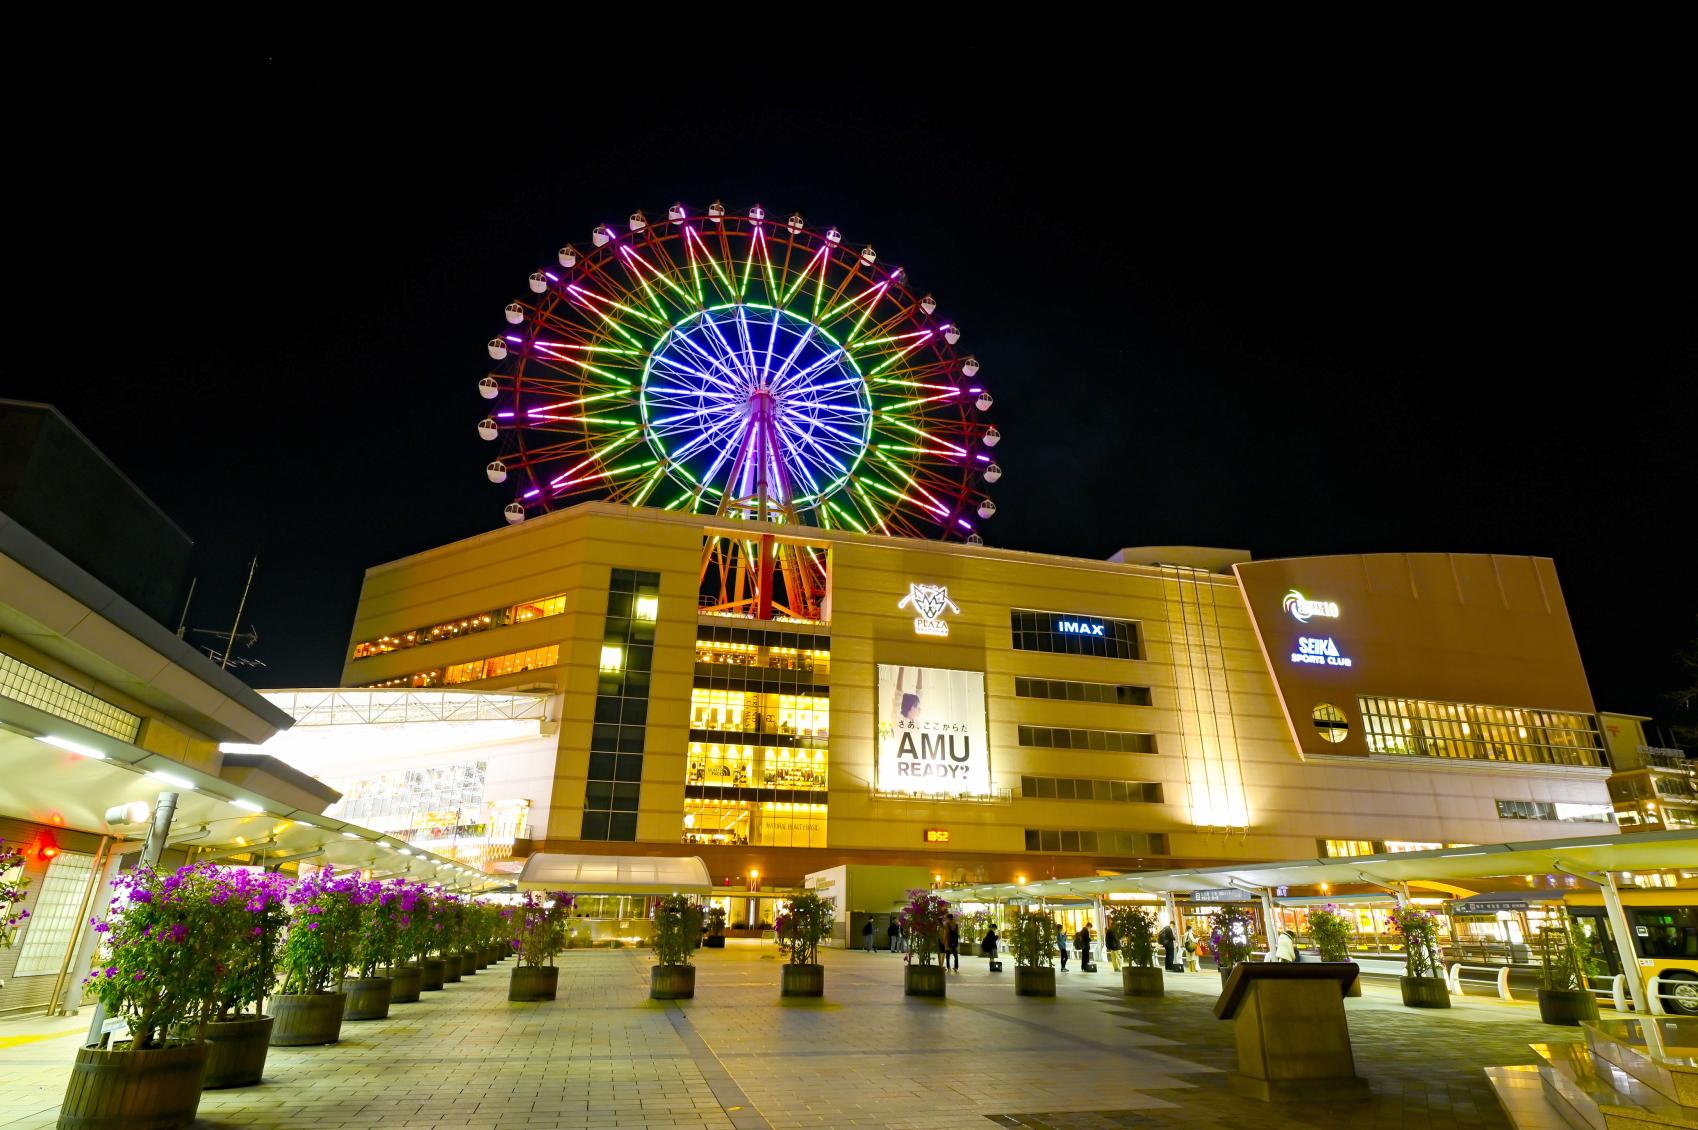  Trung tâm mua sắm Amu Plaza - nhà ga Kagoshima-Chuo 